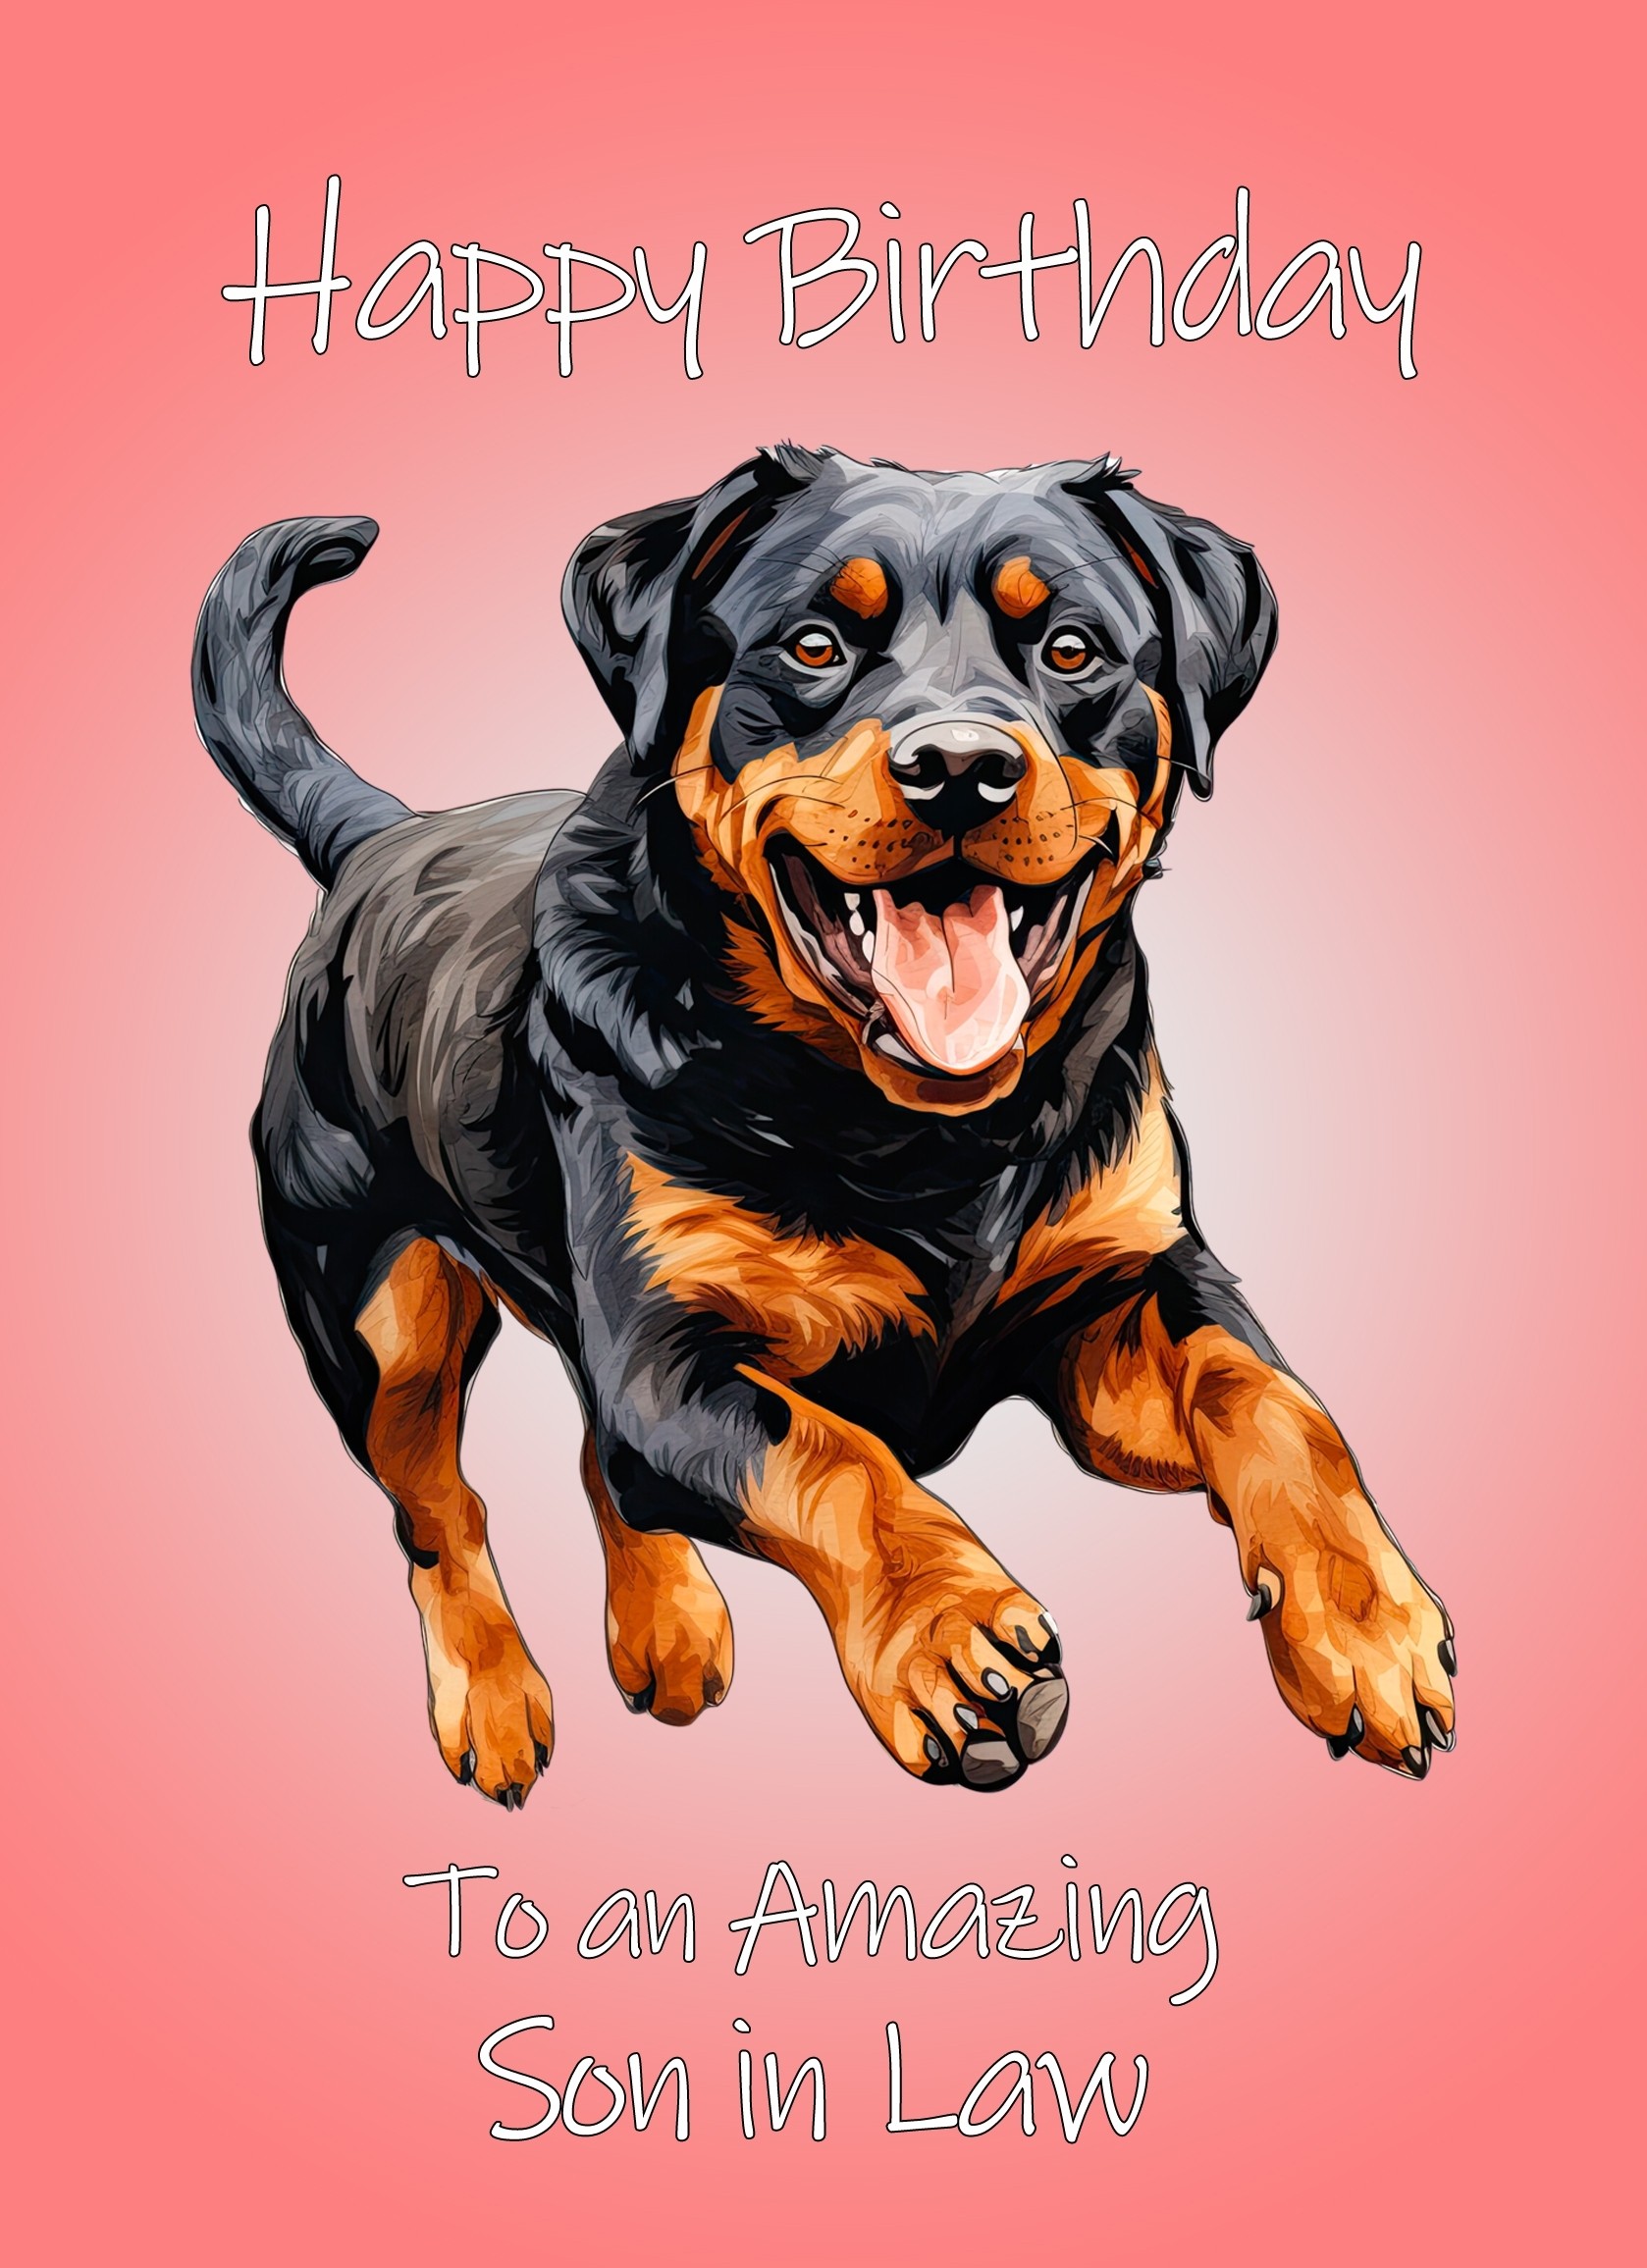 Rottweiler Dog Birthday Card For Son in Law